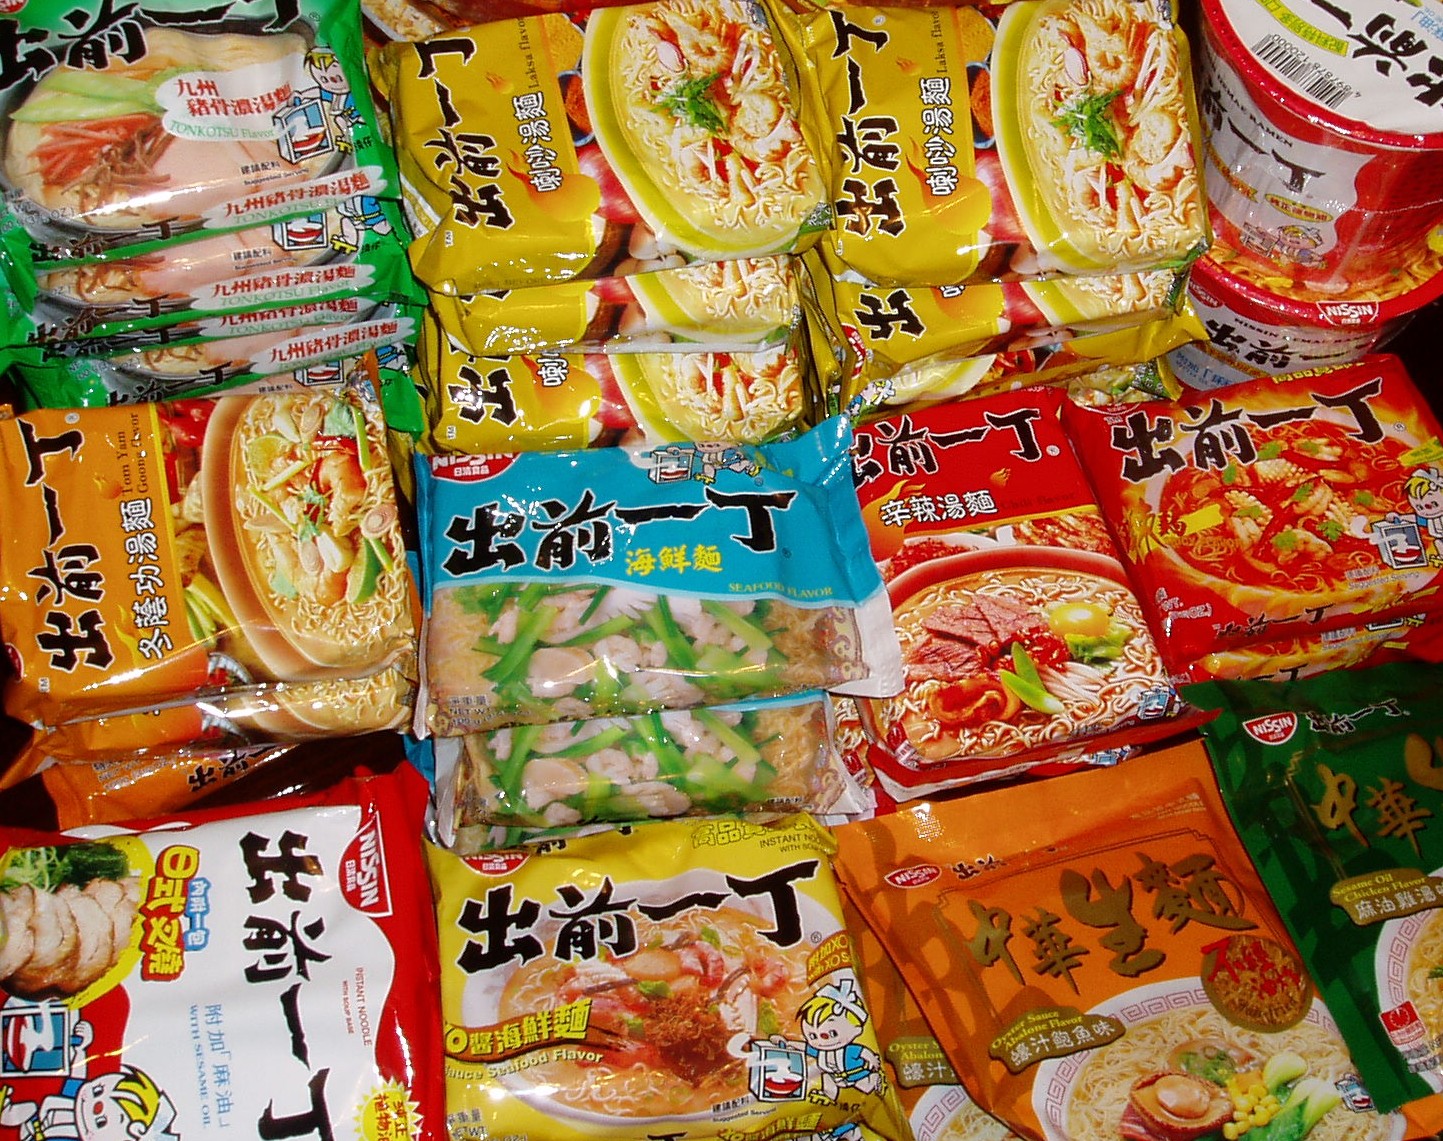 Packages of Ramen Noodles